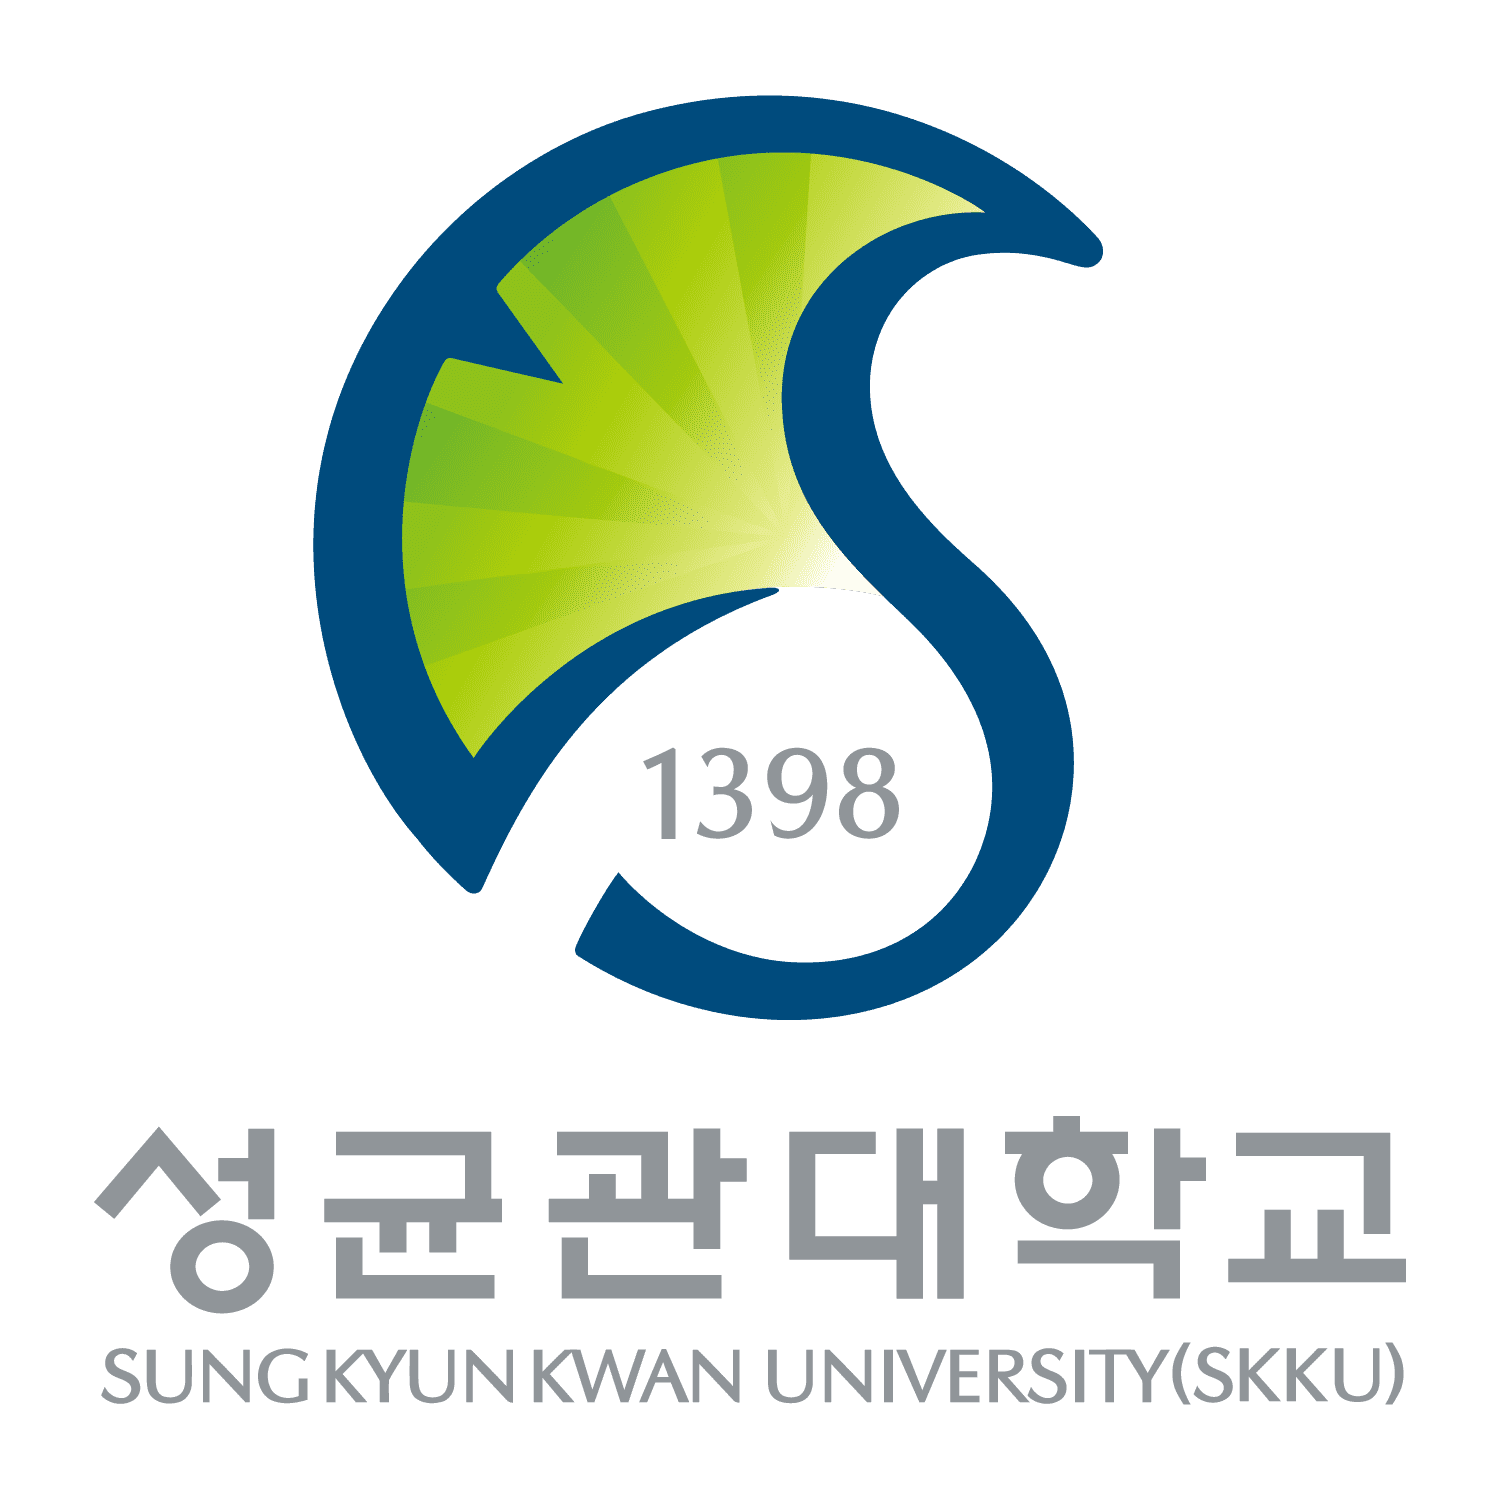 Sungkyunkwan University (SKKU) logo